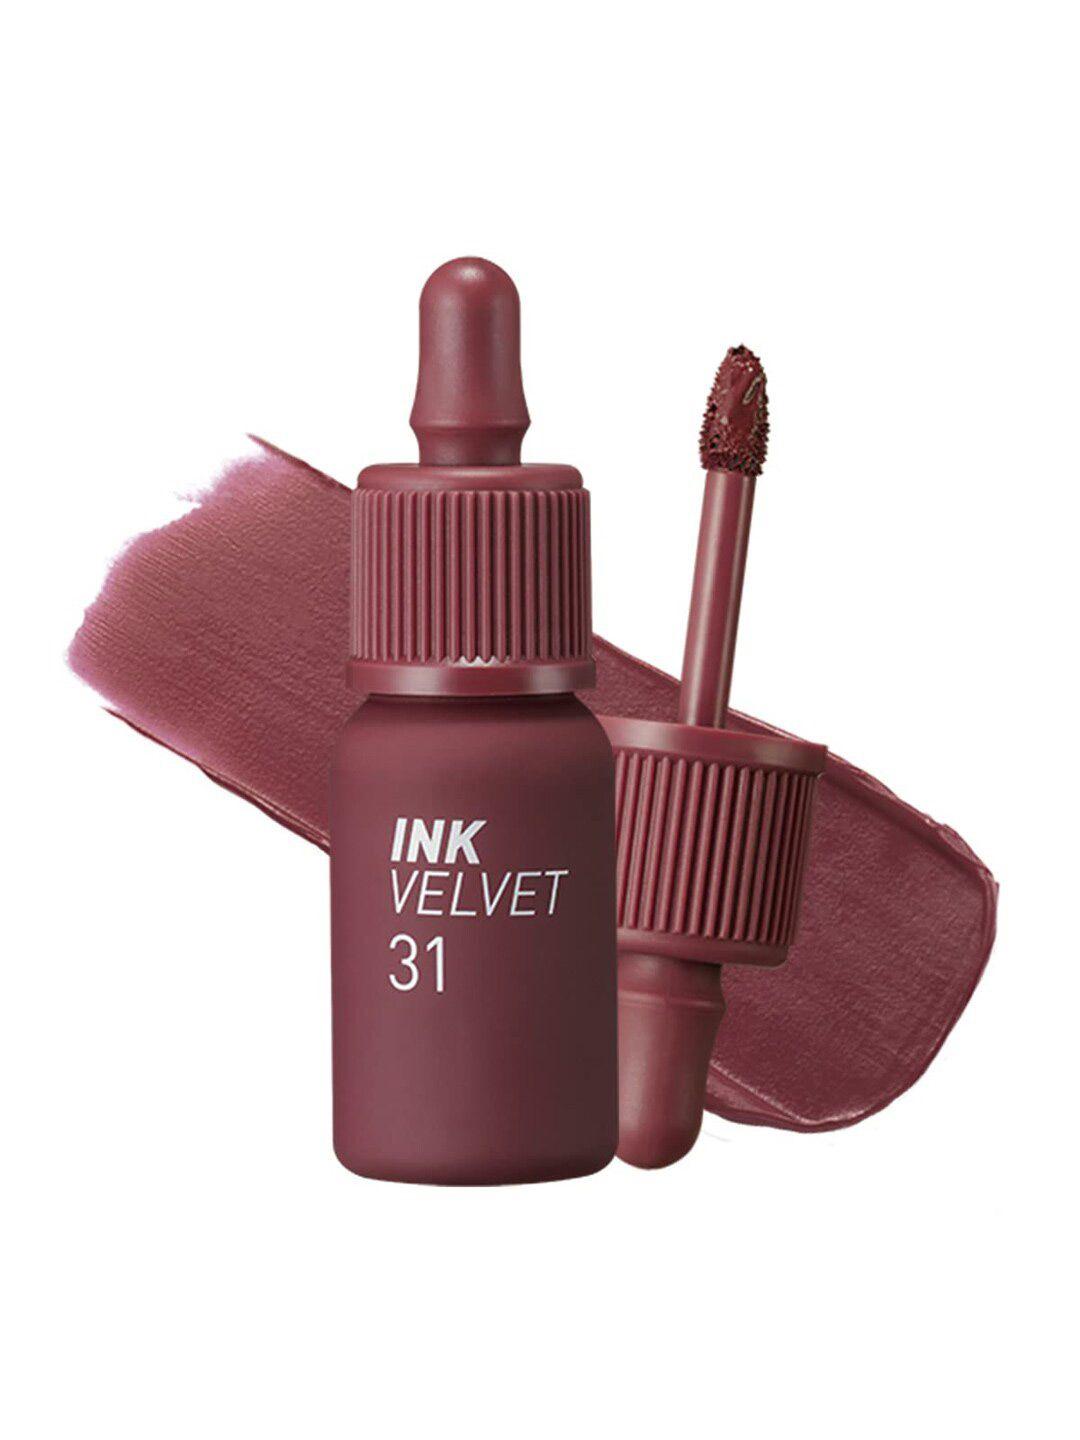 peripera ink velvet long-lasting liquid lipstick - wine nude 31